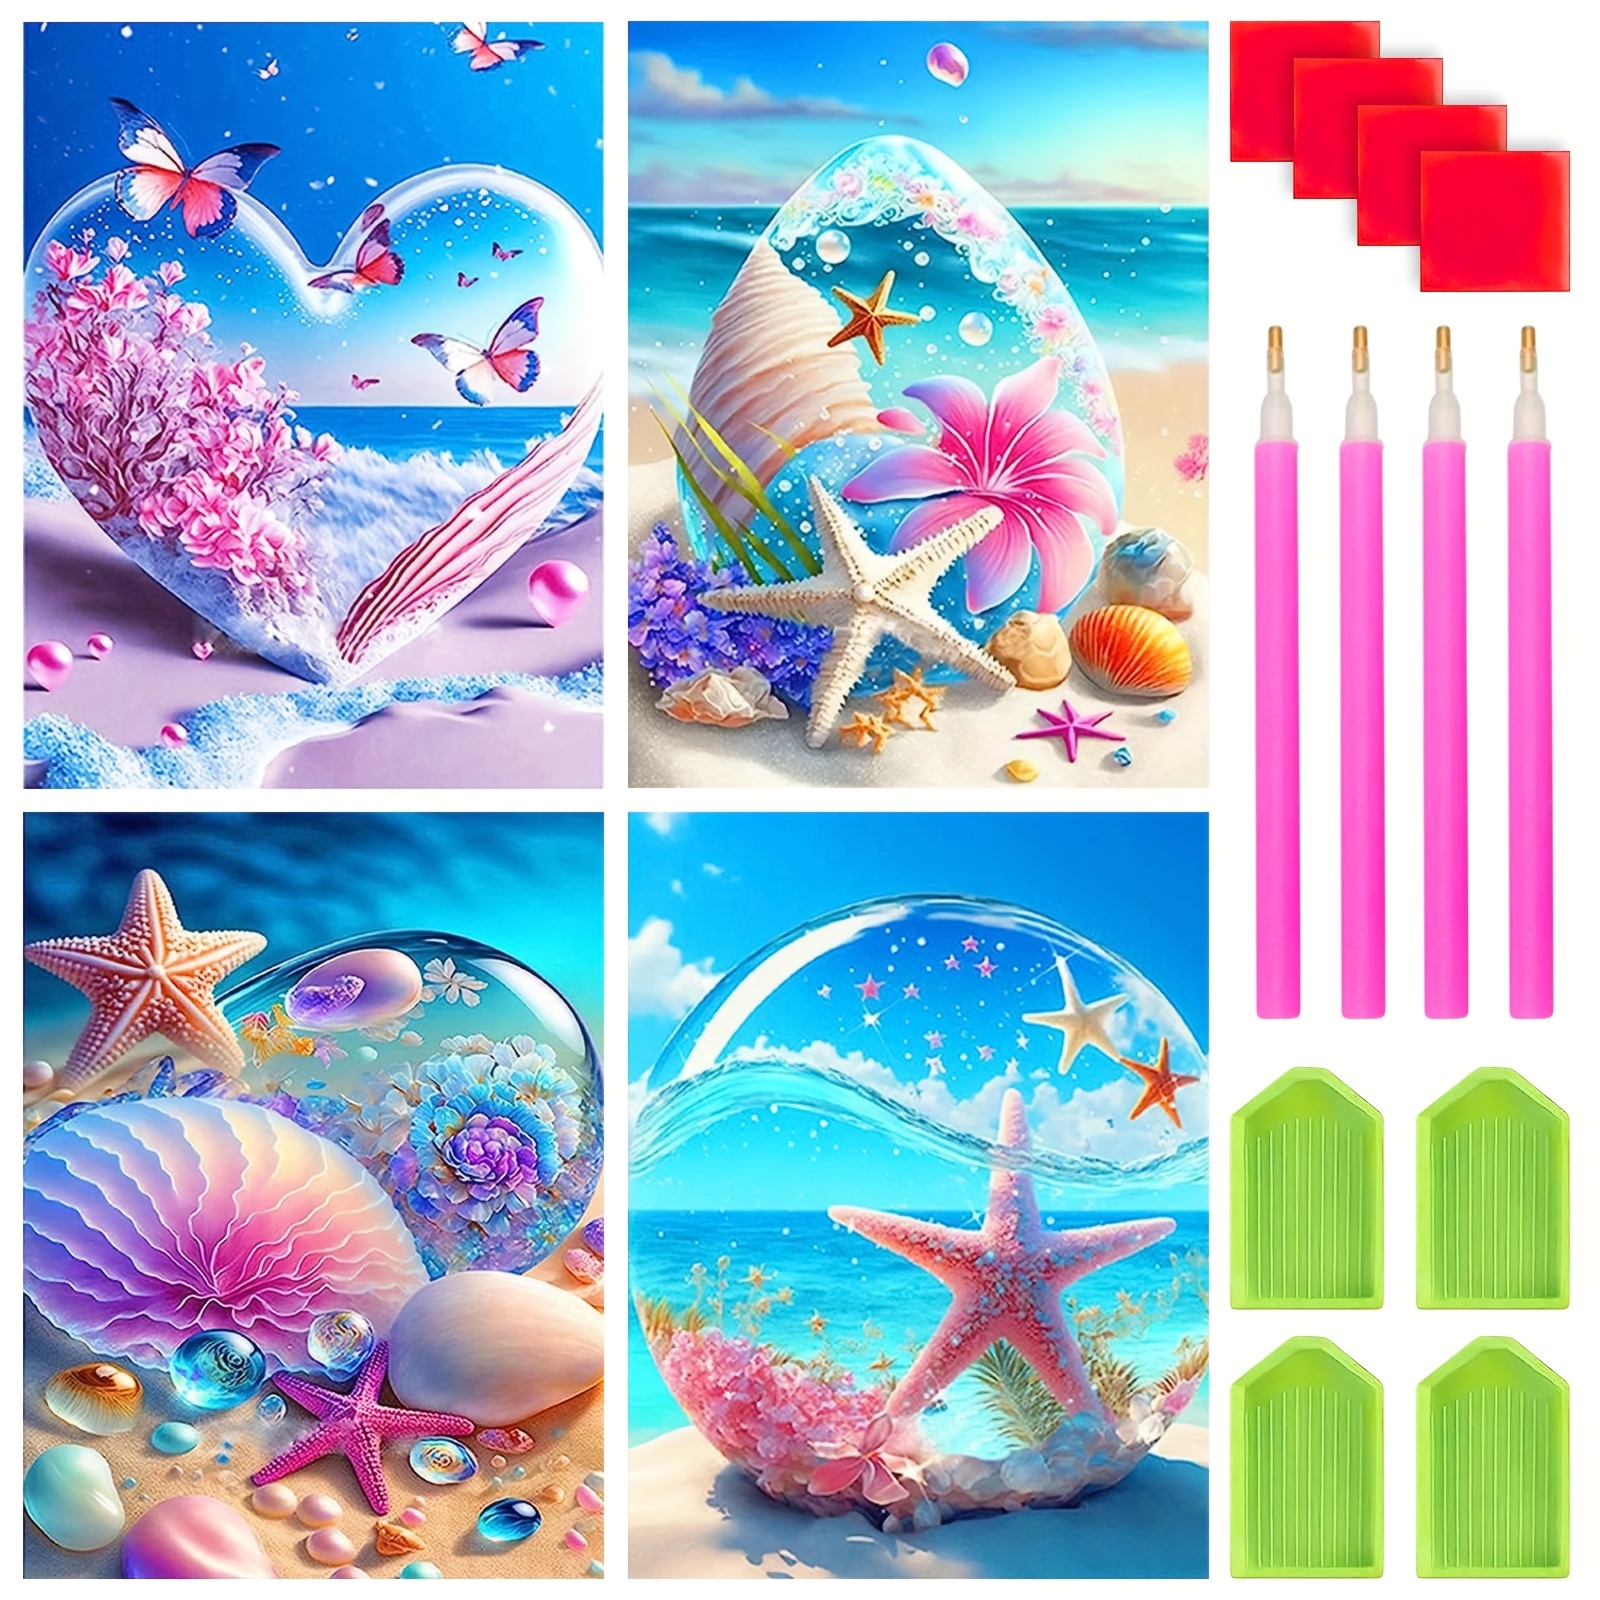 Starfish on the Beach - Diamond Painting Kit